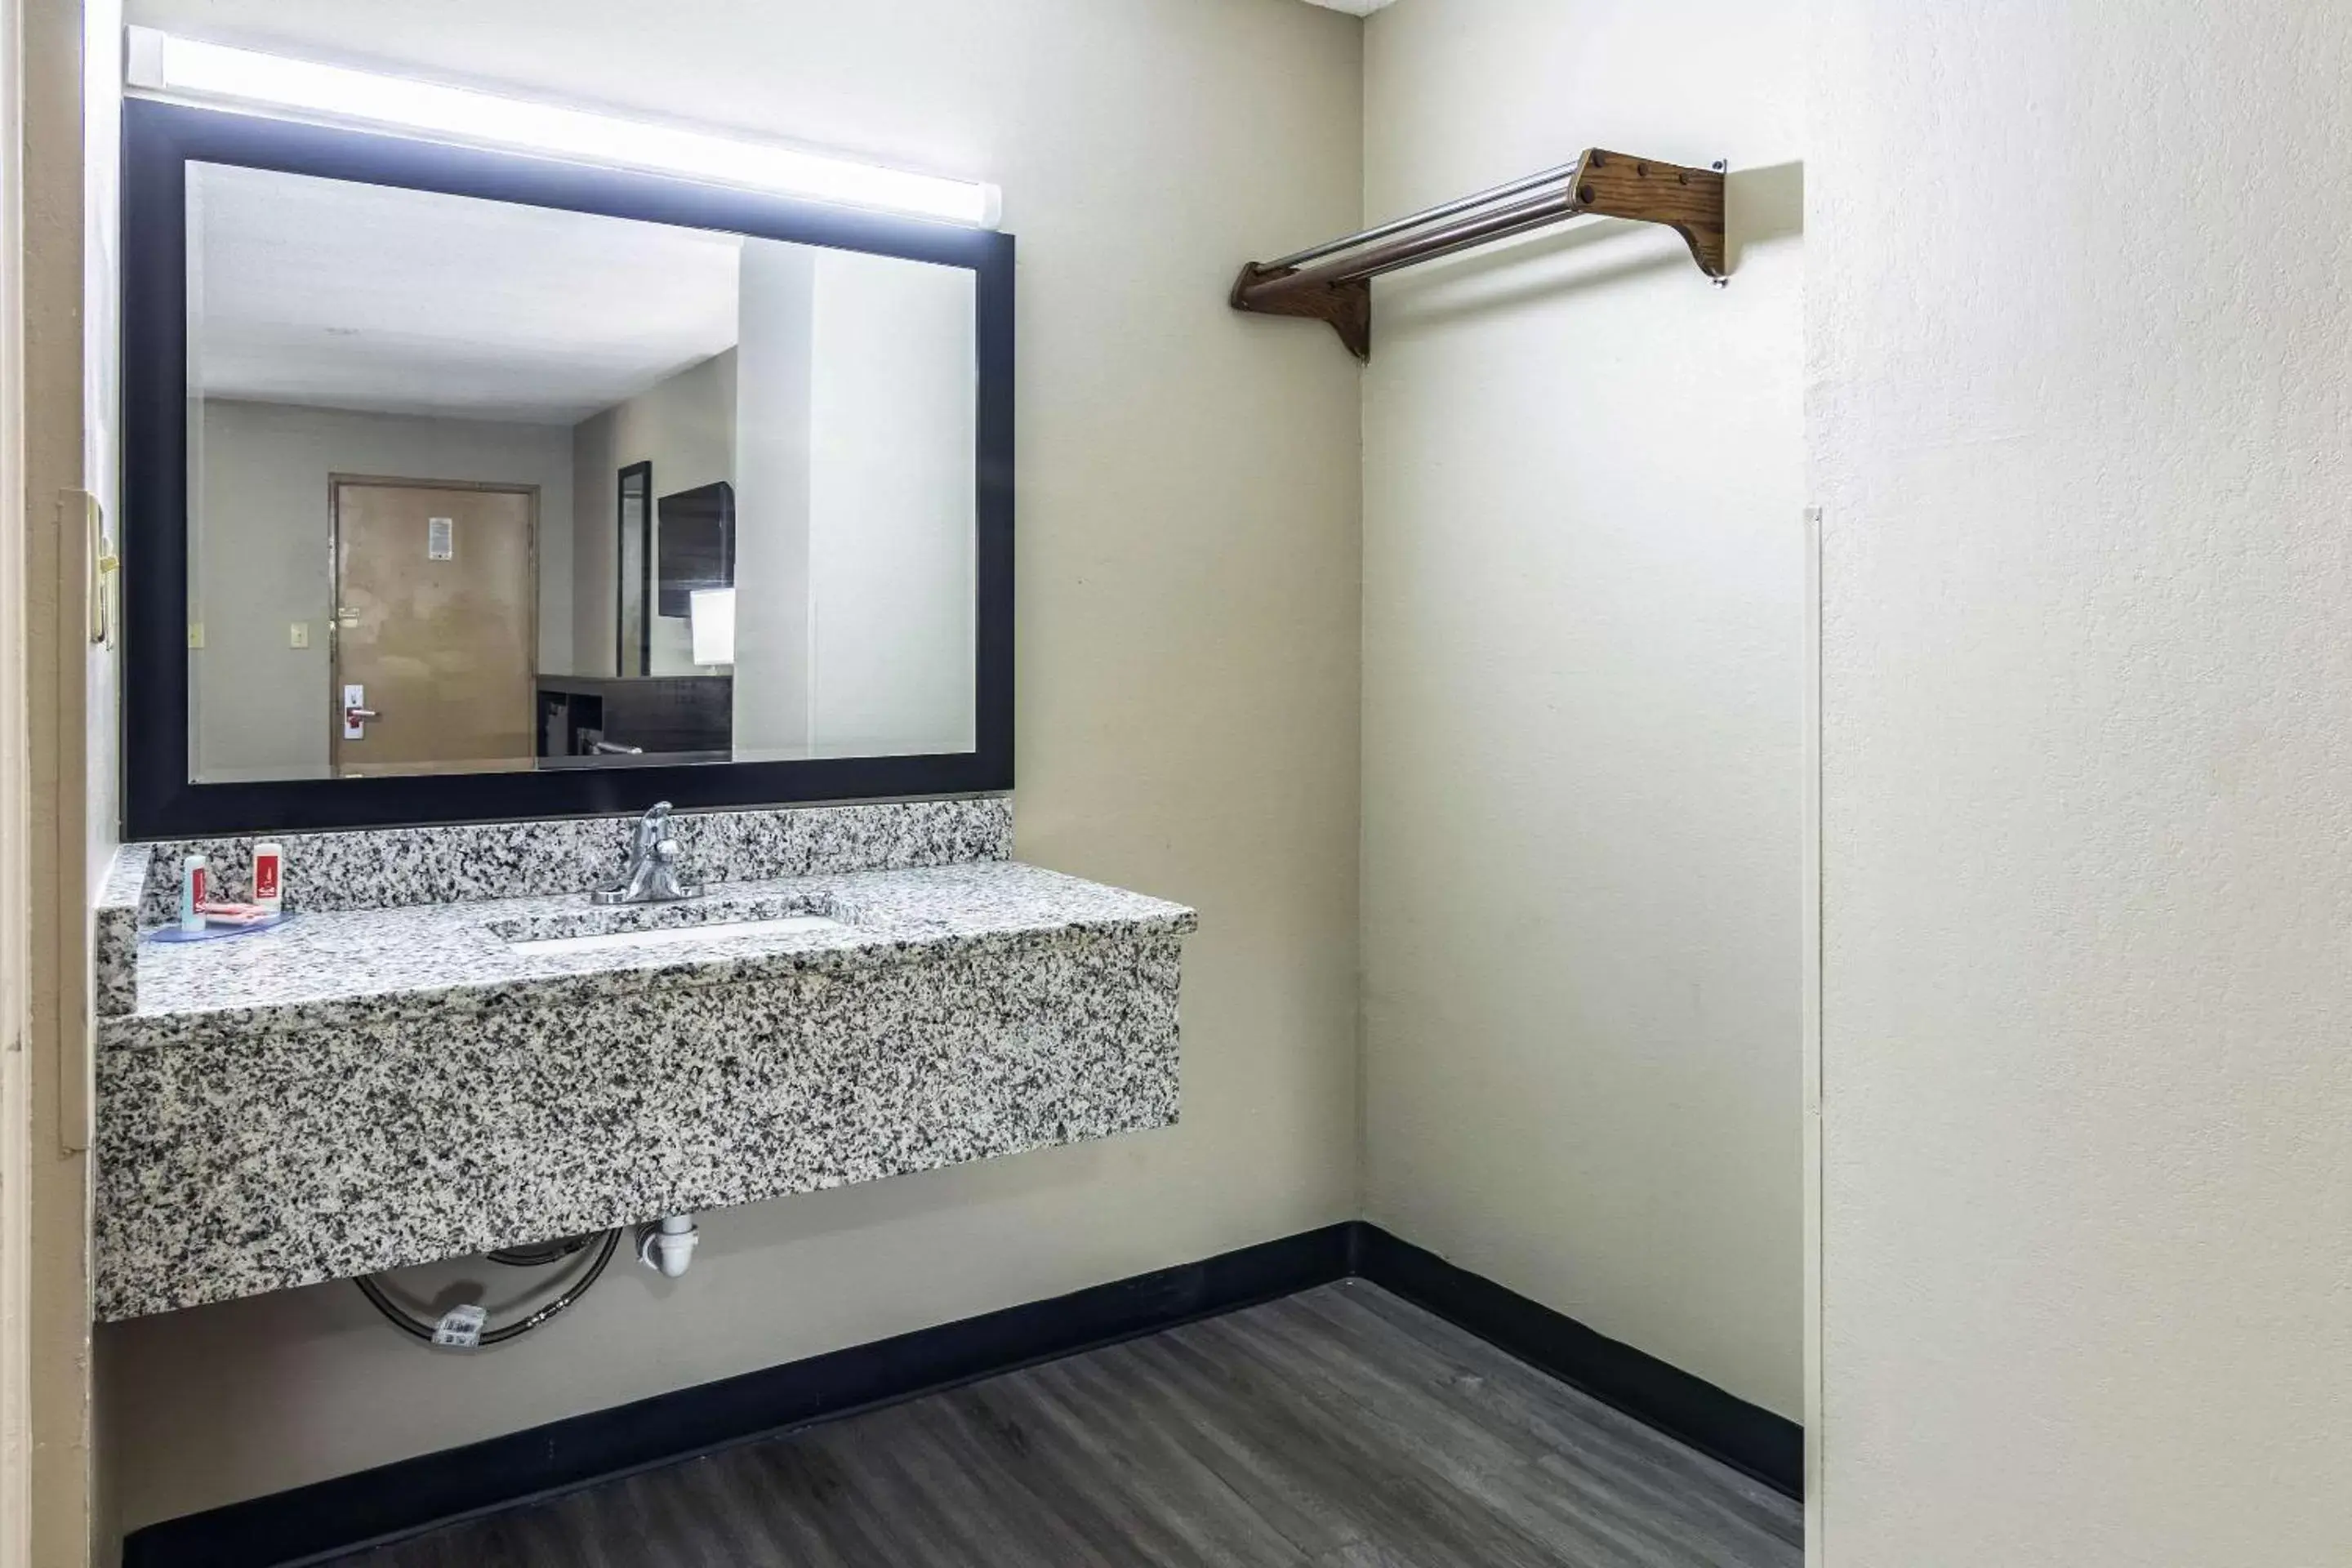 Photo of the whole room, Bathroom in Econo Lodge Opelika